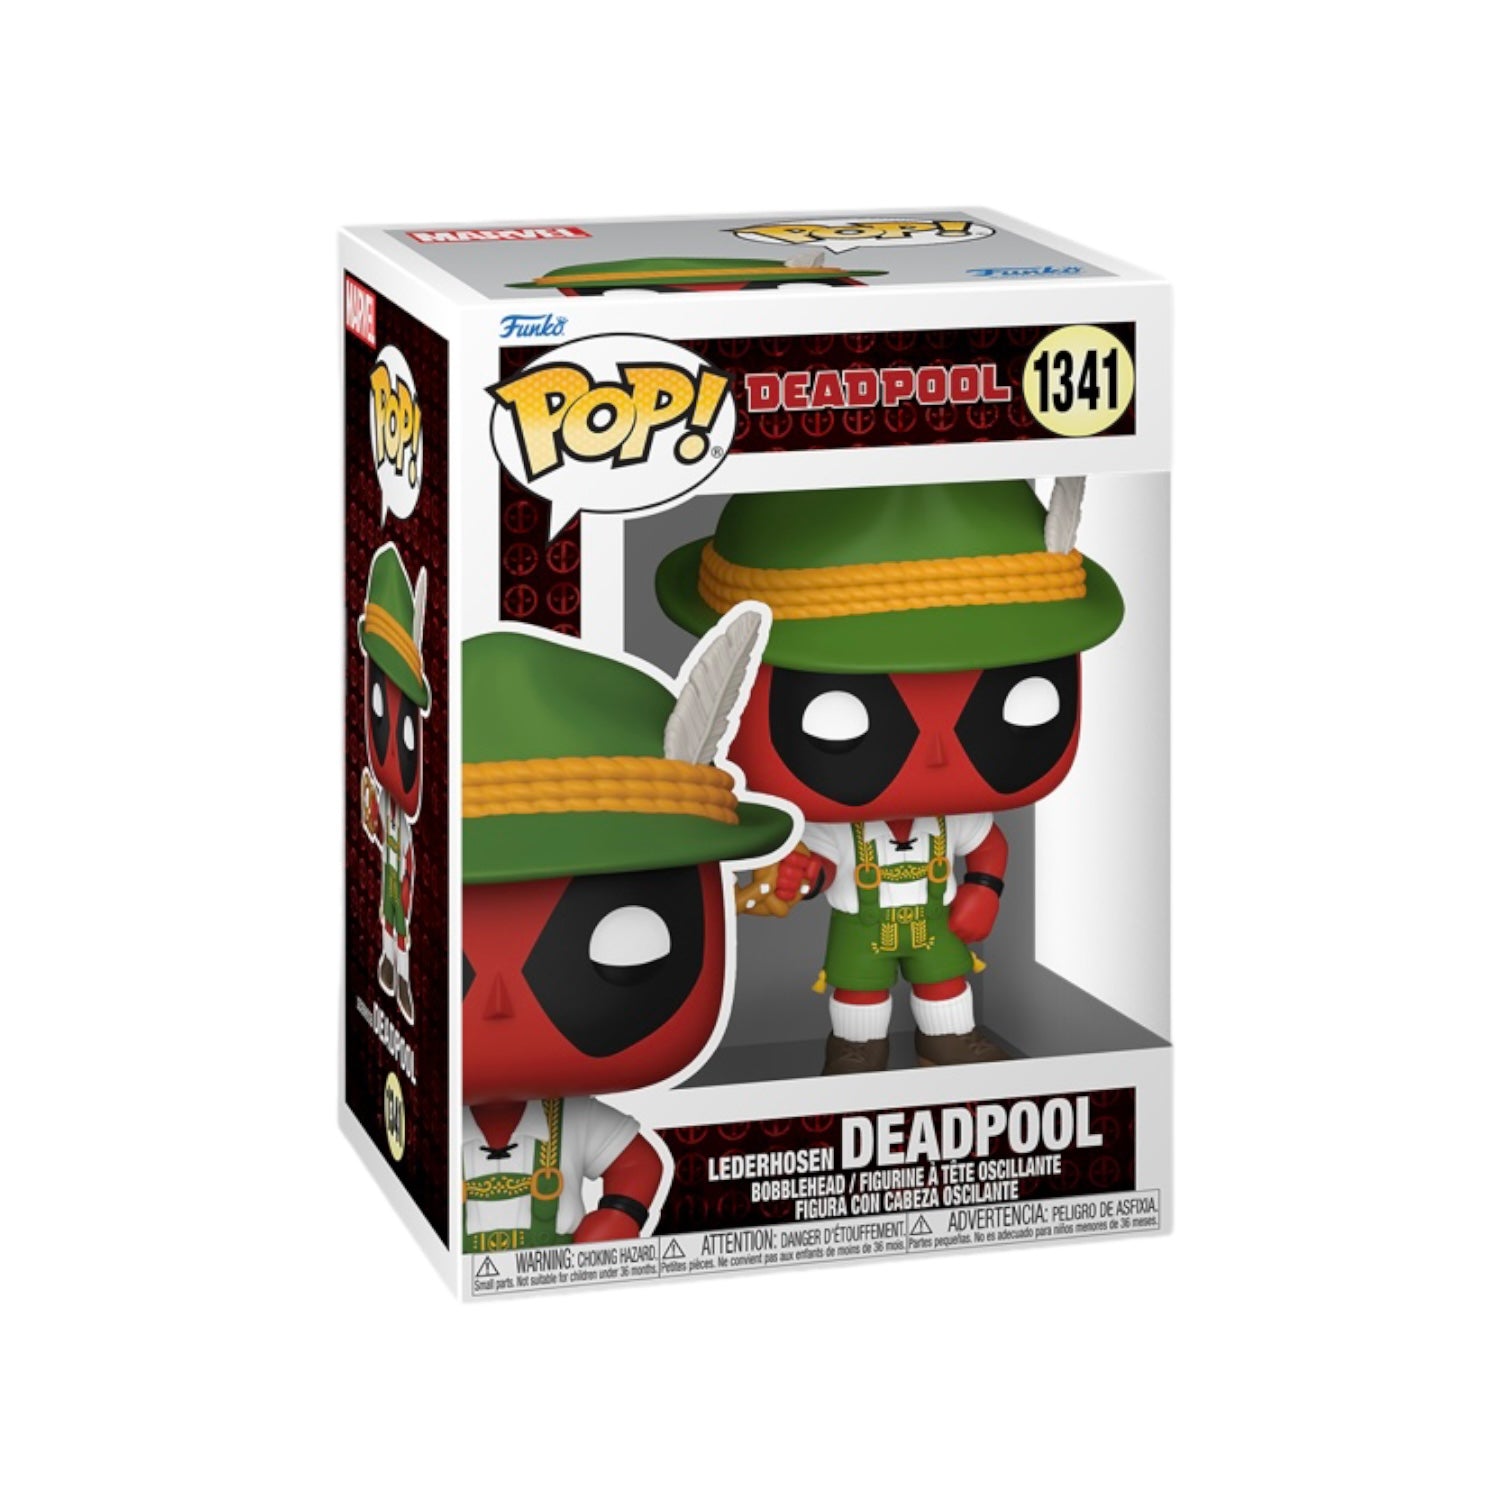 Lederhosen Deadpool #1341 Funko Pop! Deadpool